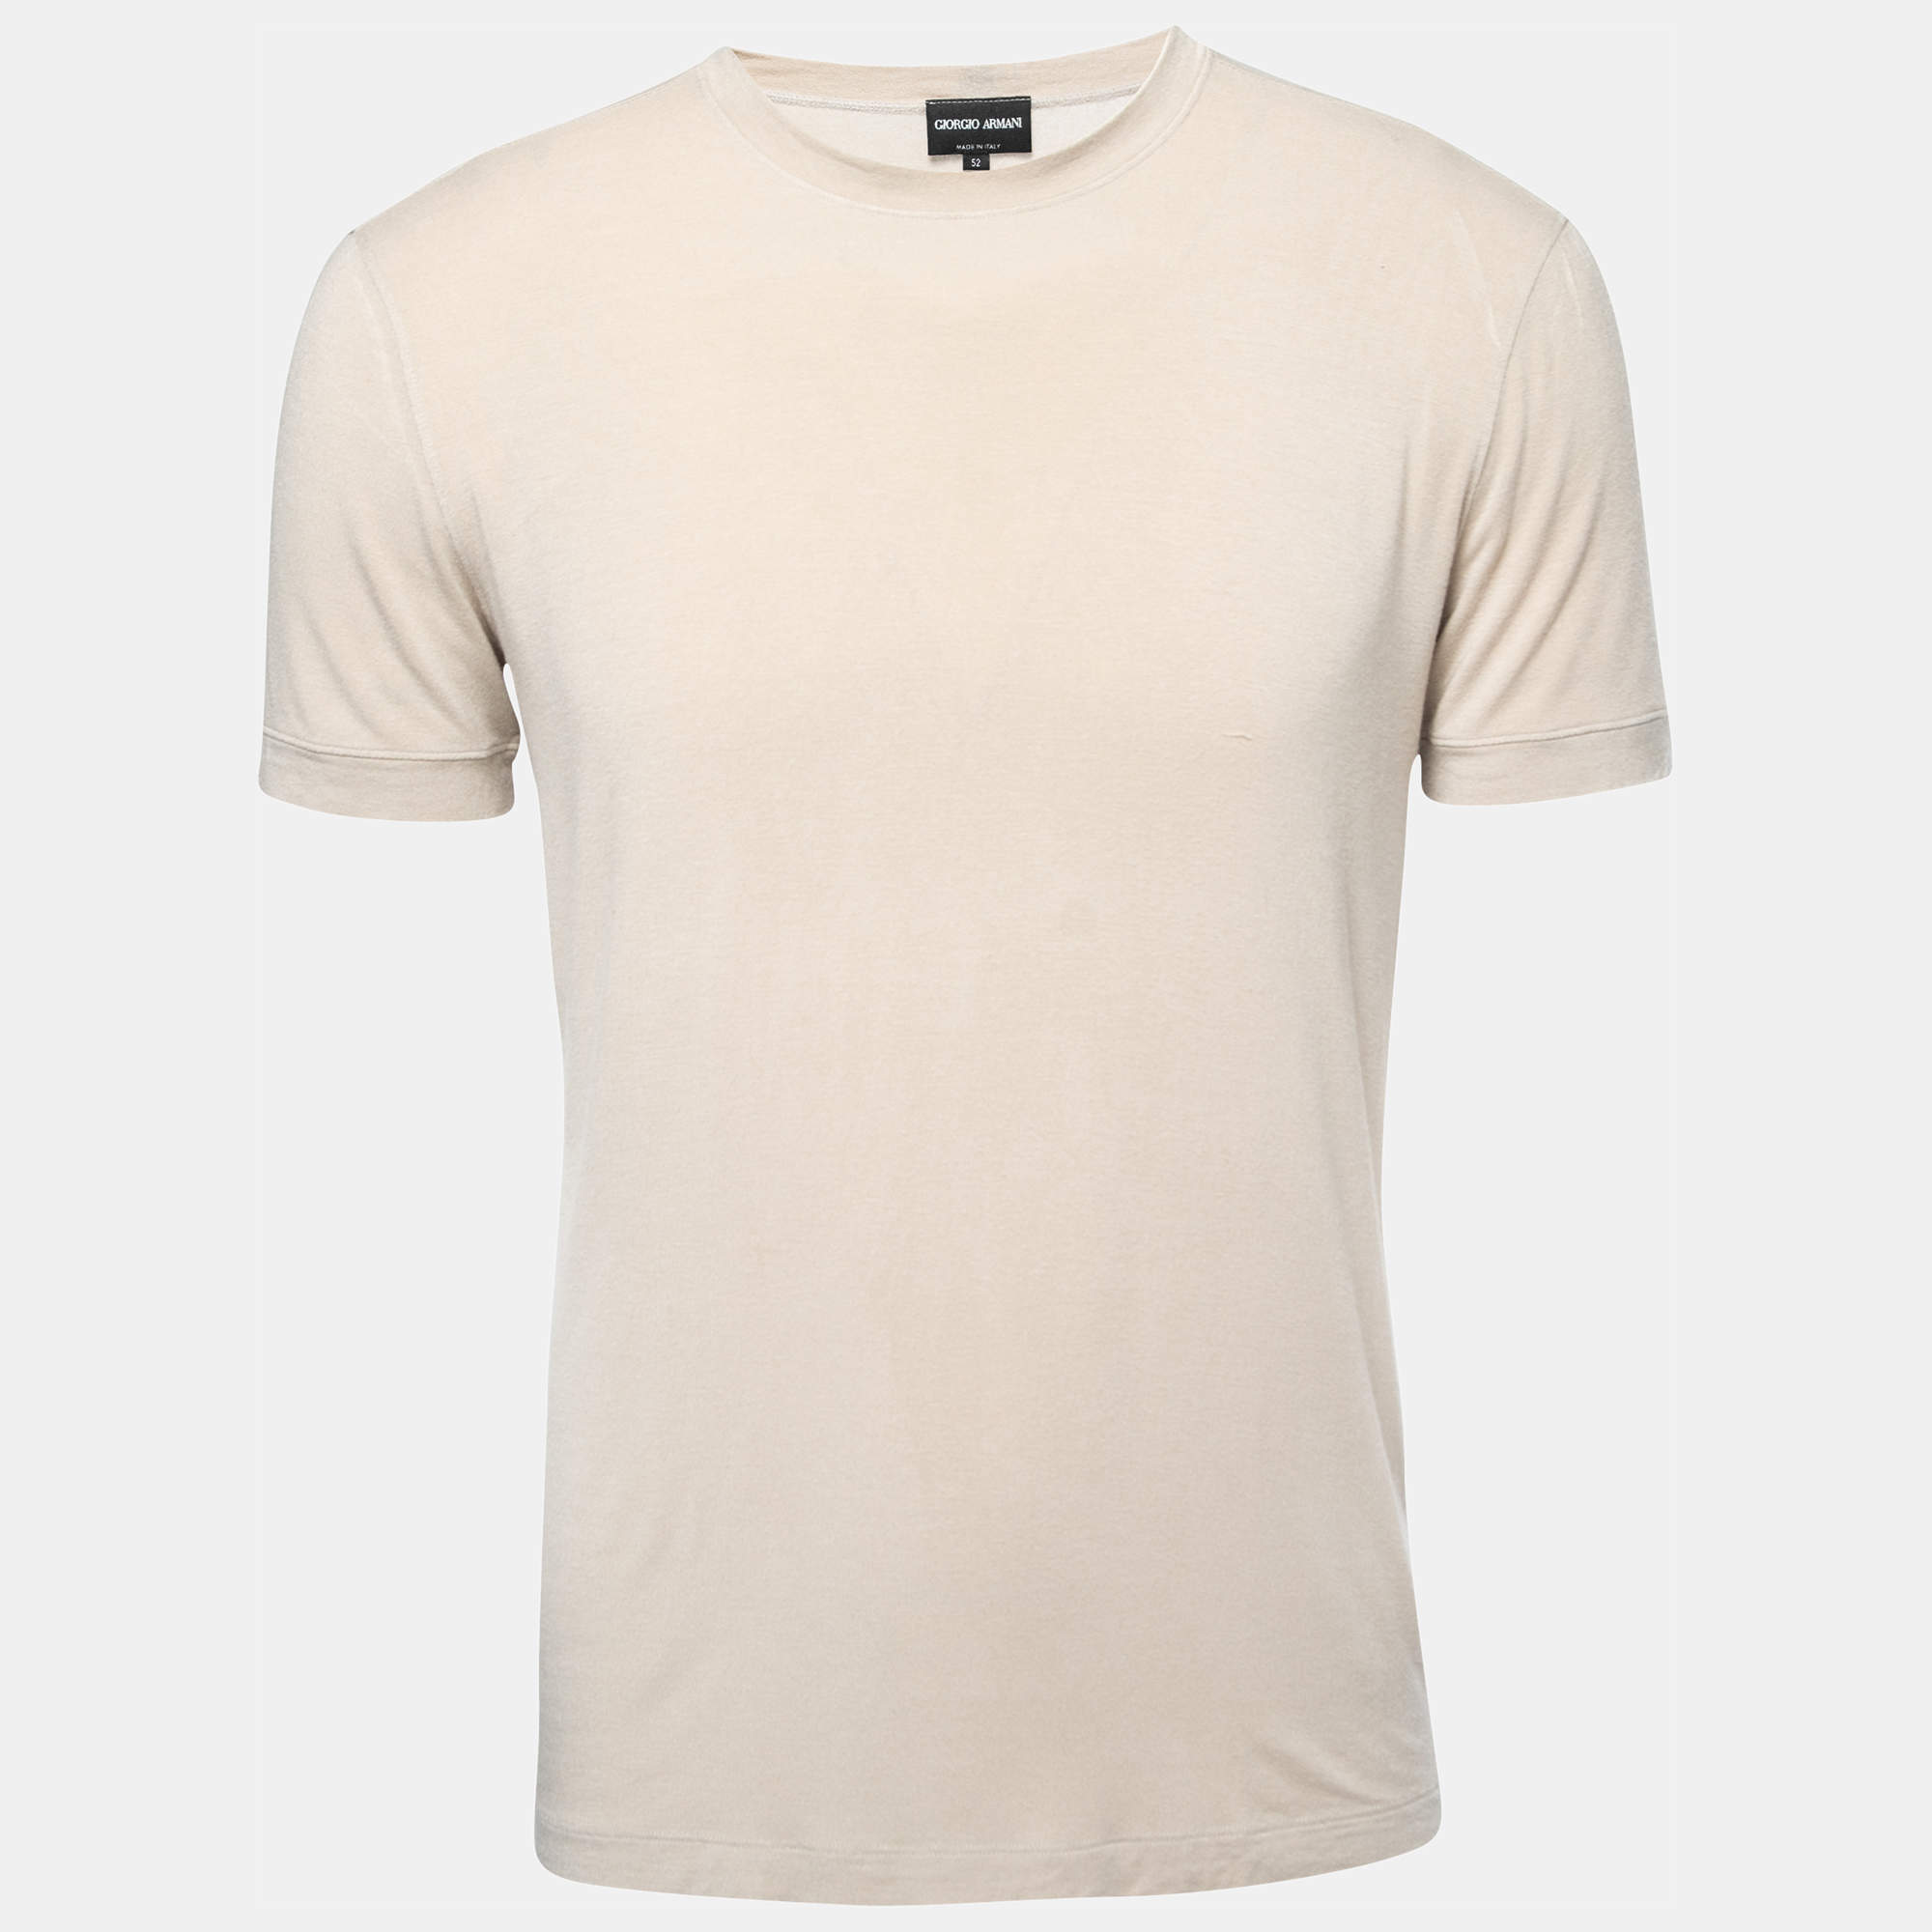 Giorgio Armani Men's Short-sleeved Cotton Shirt